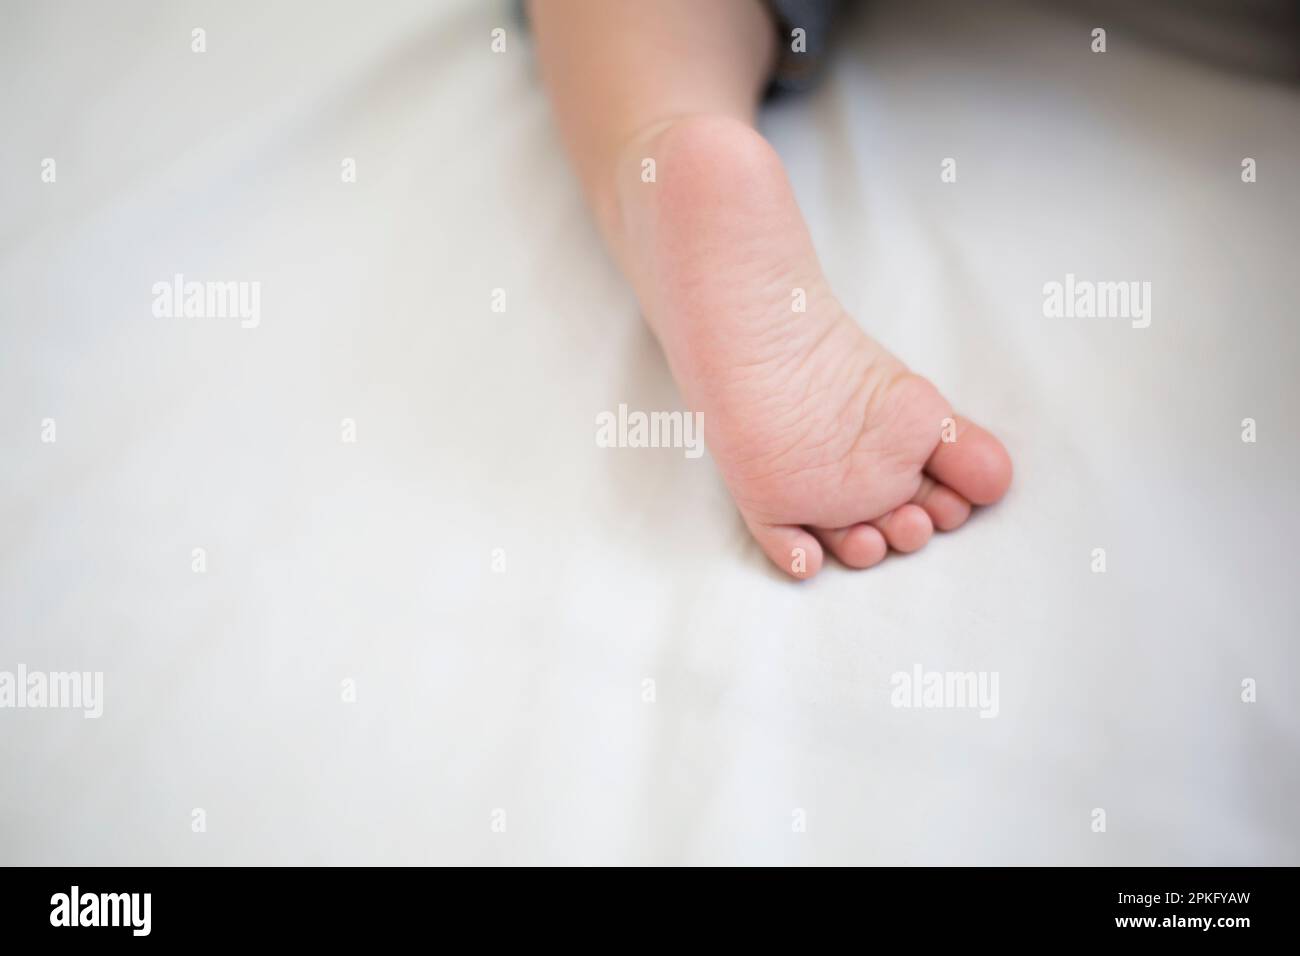 Baby's feet taking a nap Stock Photo